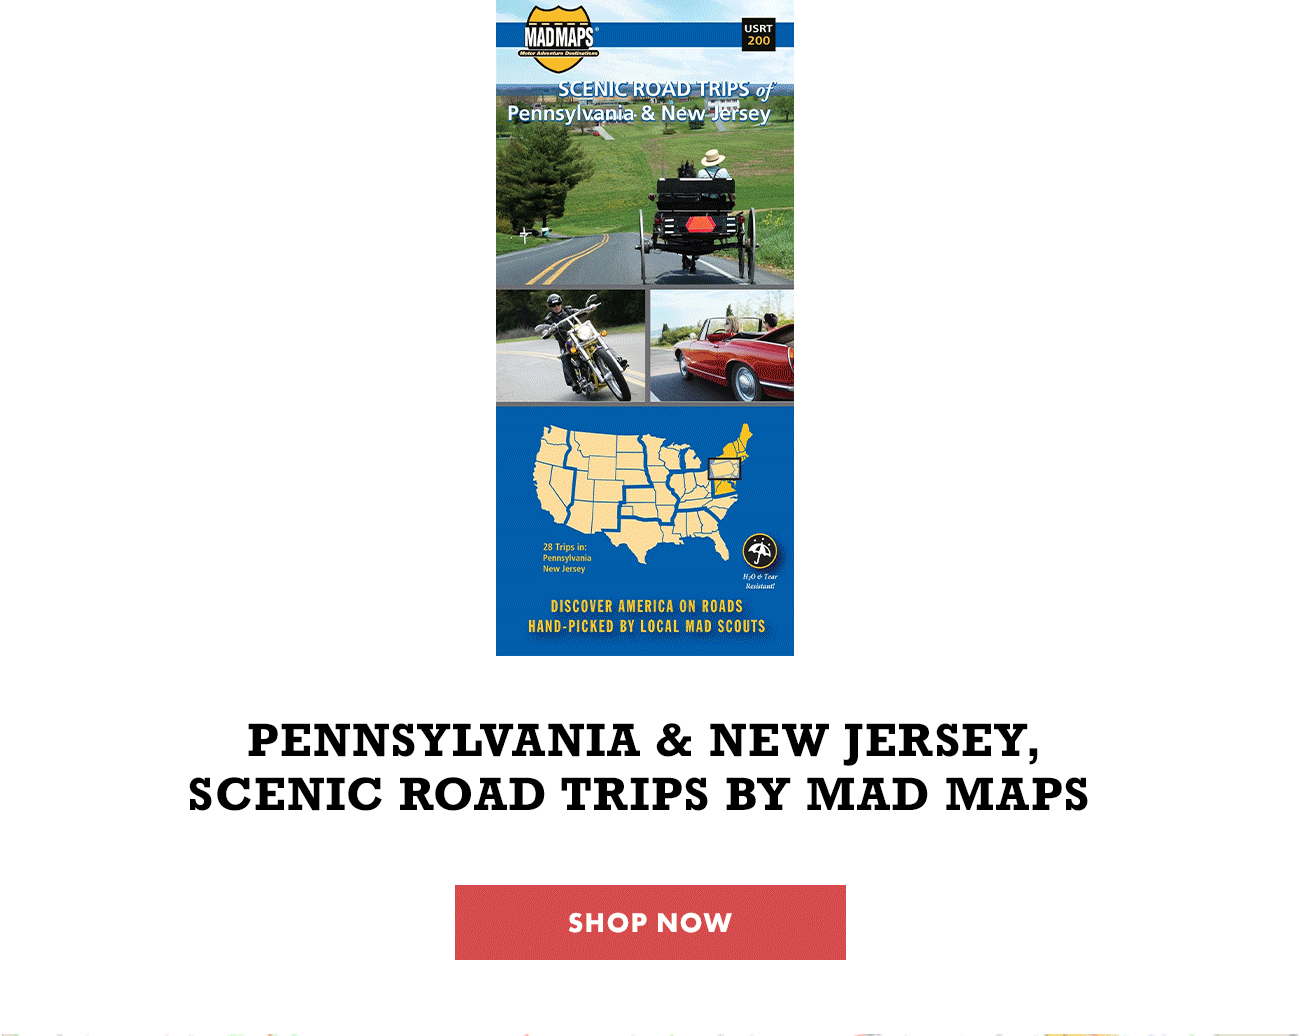 Pennsylvania & New Jersey Shop Now